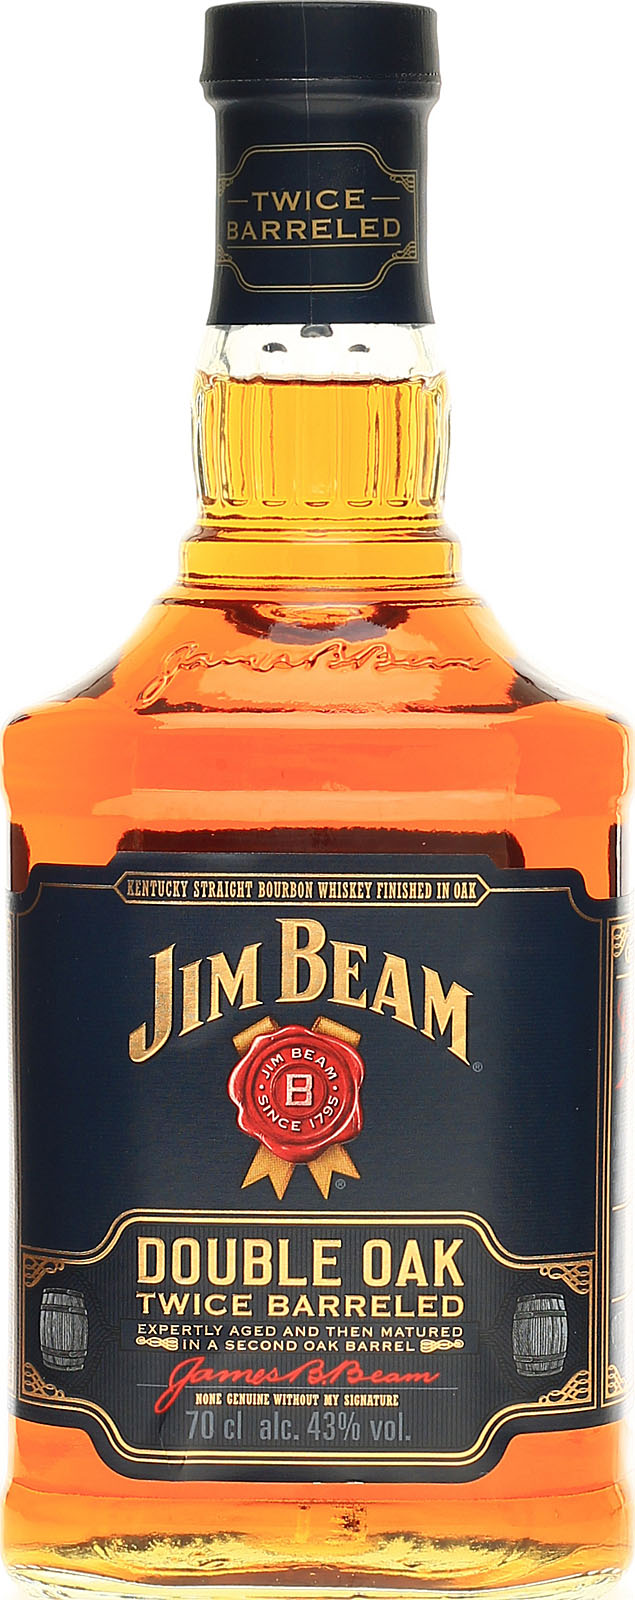 Jim Beam Barreled Oak Double Whisky bei uns im Sh Twice